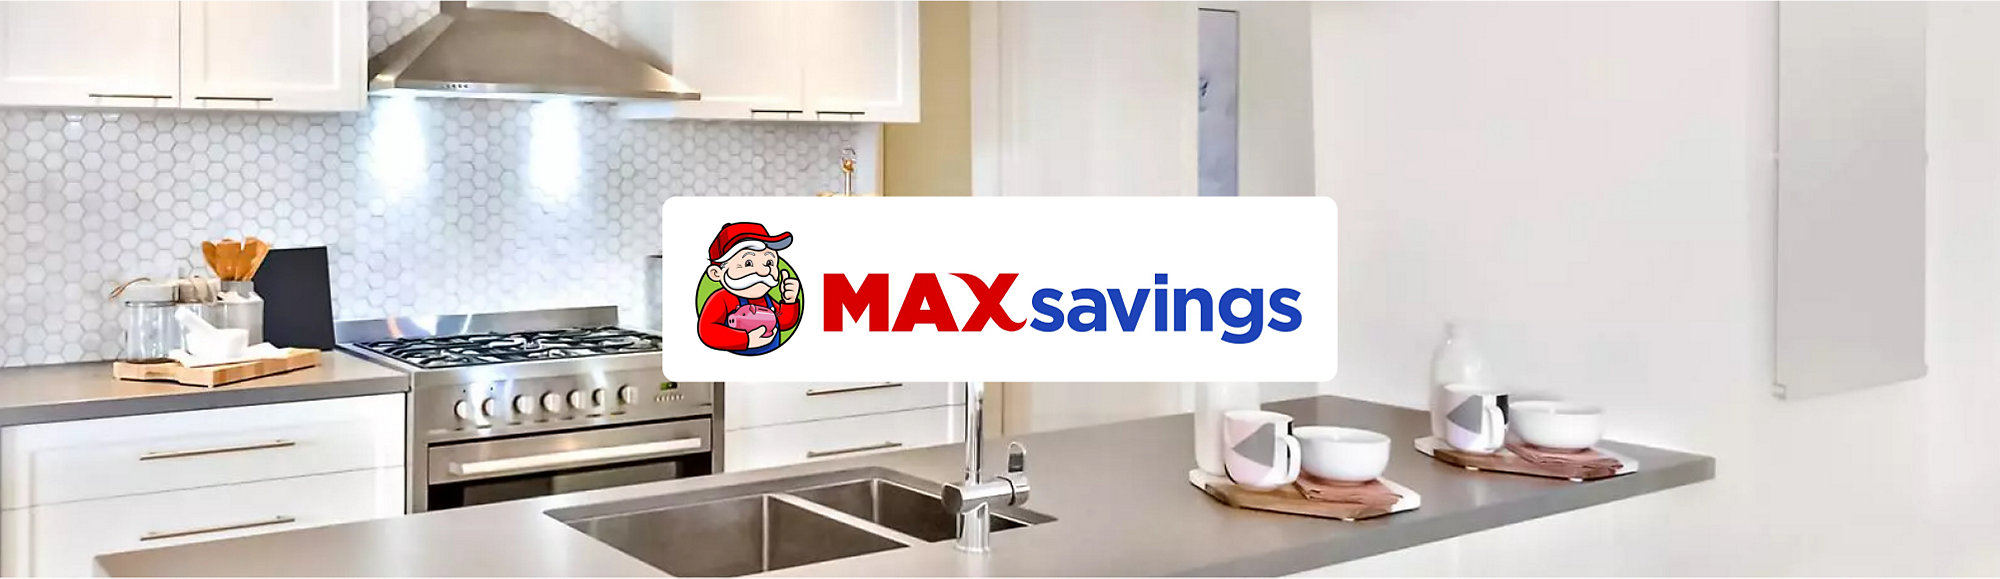 MAX savings